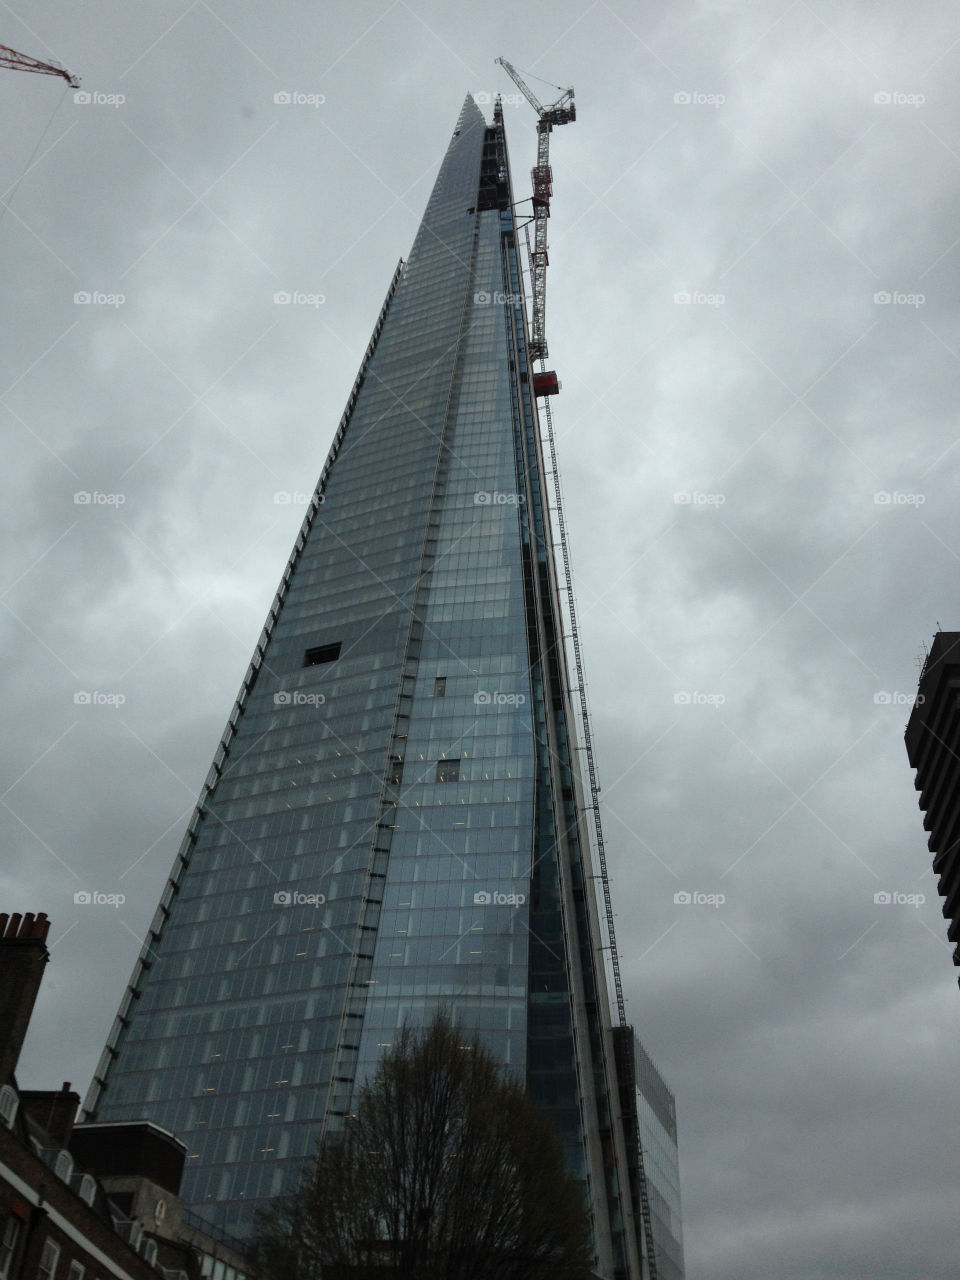 london buildings landmark tall by campospatino